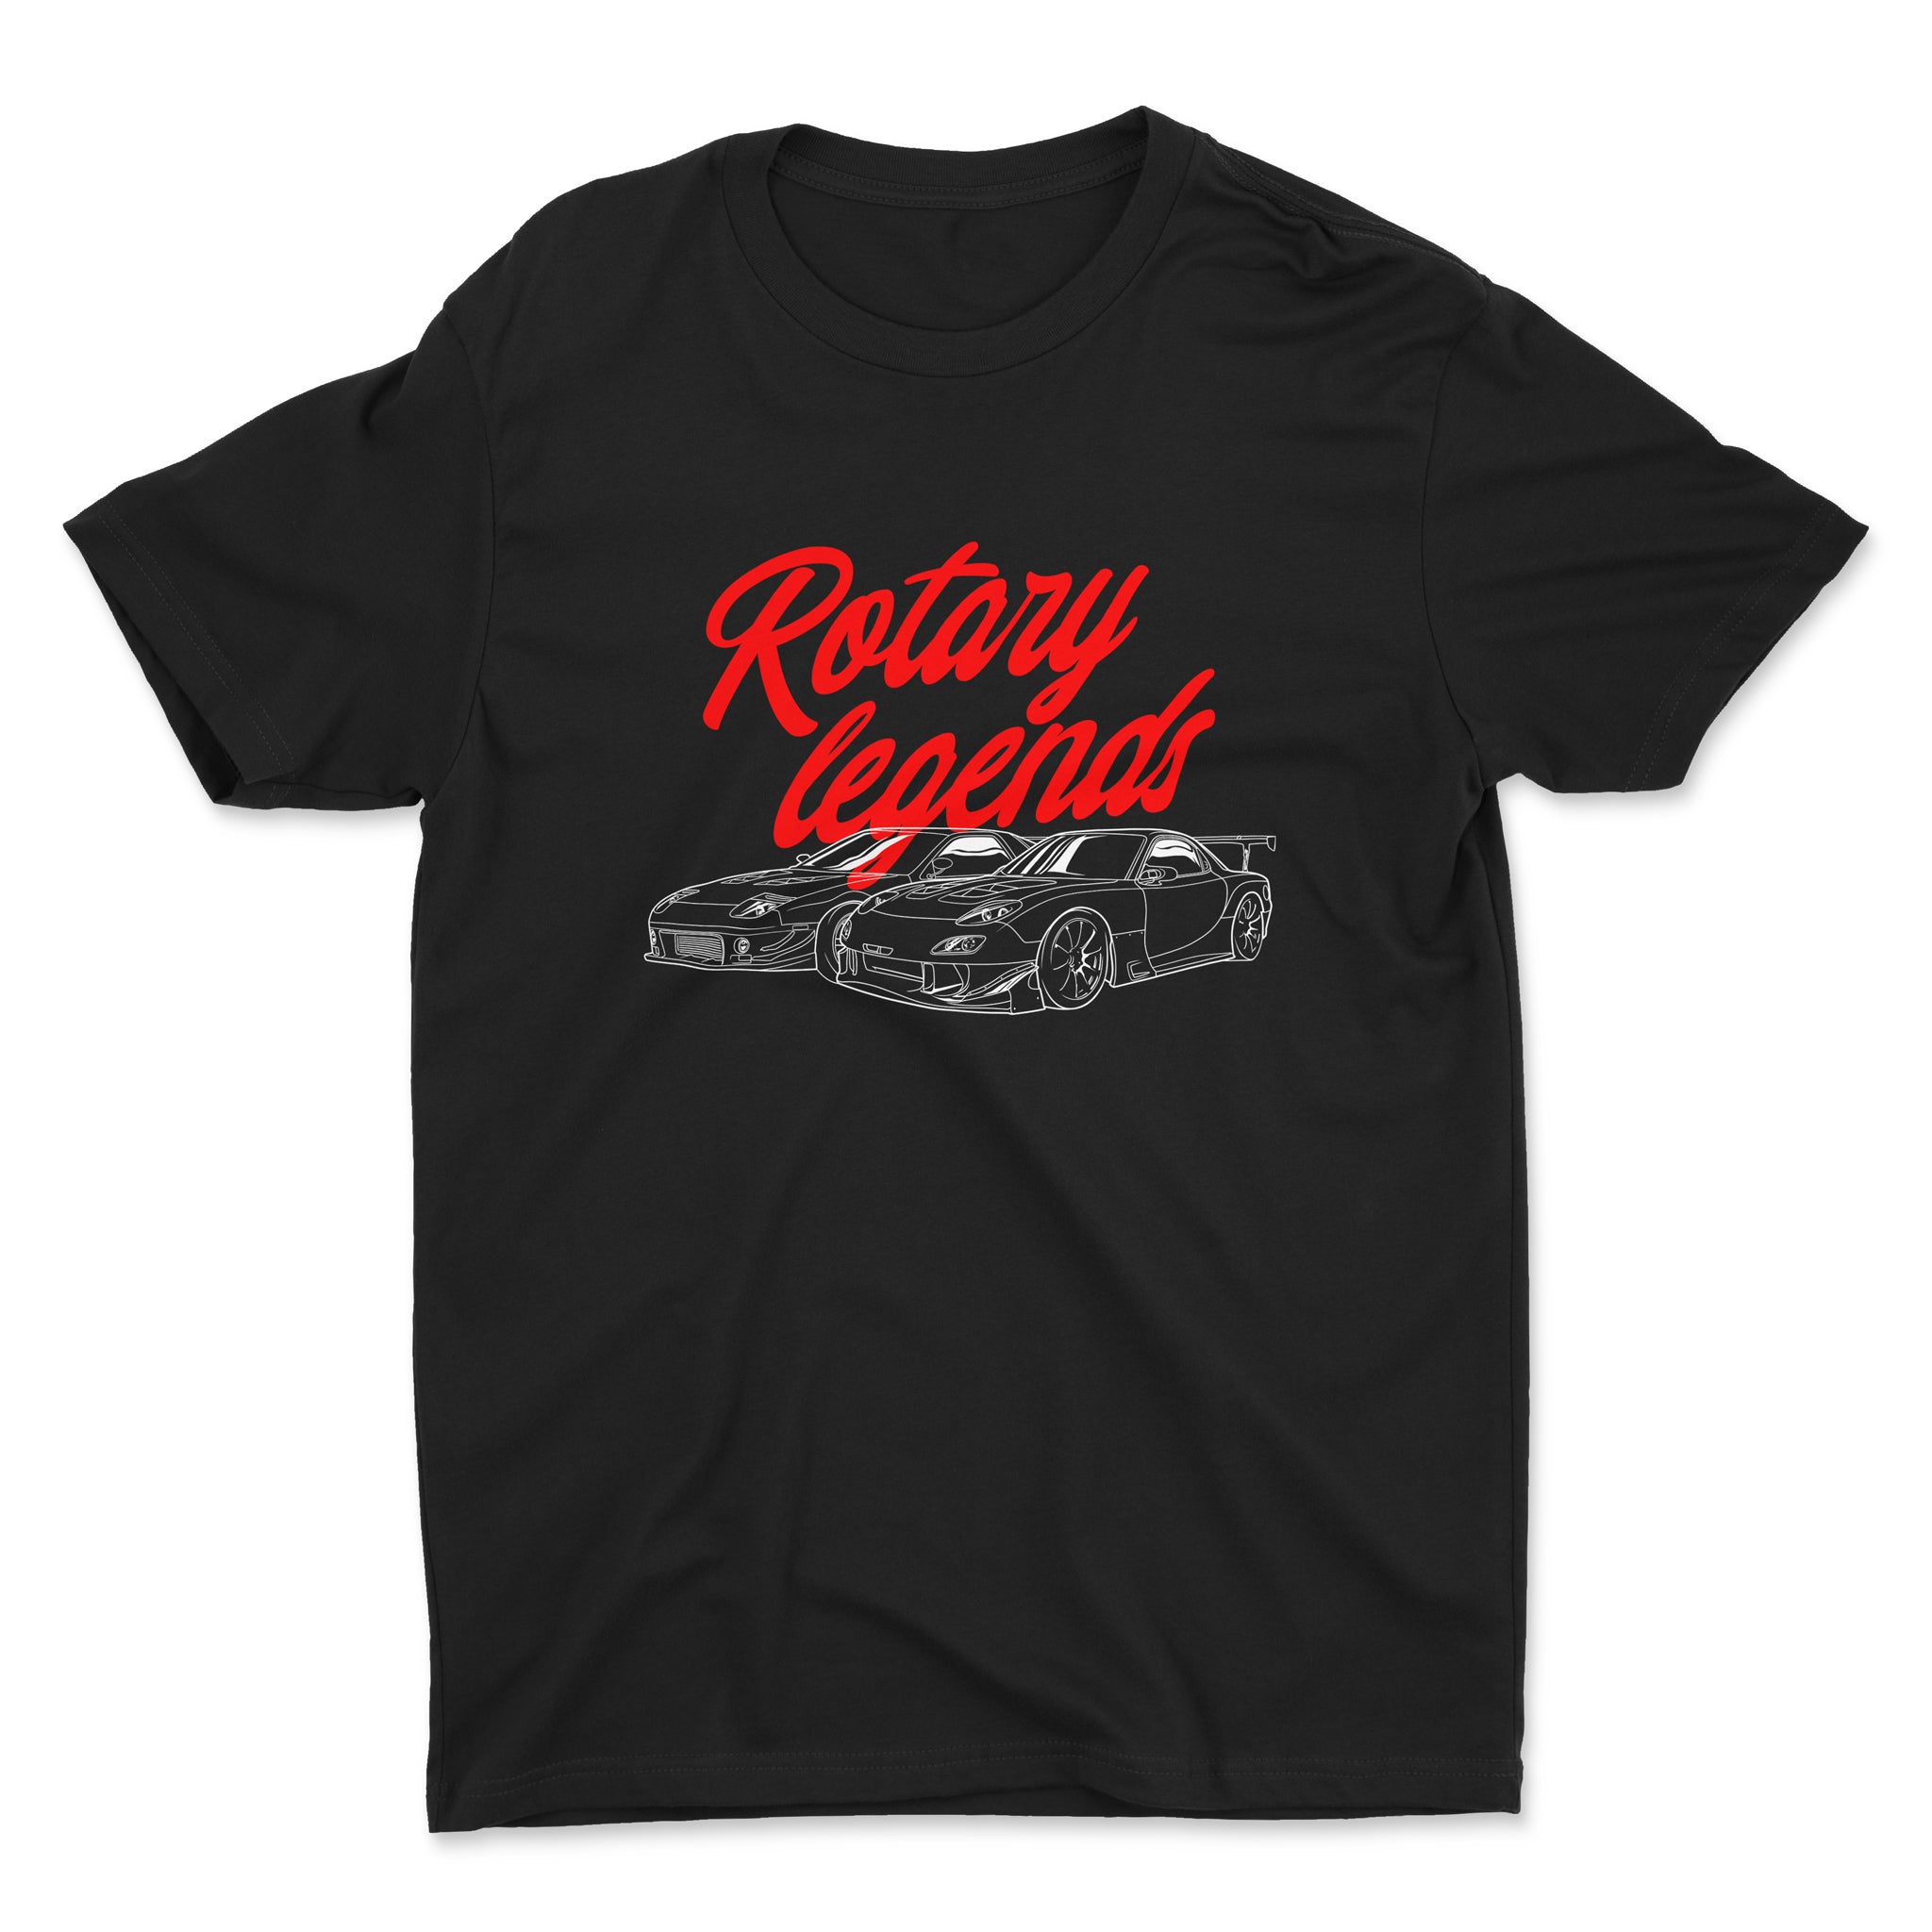 Rotary Legends - Car T-Shirt - Black